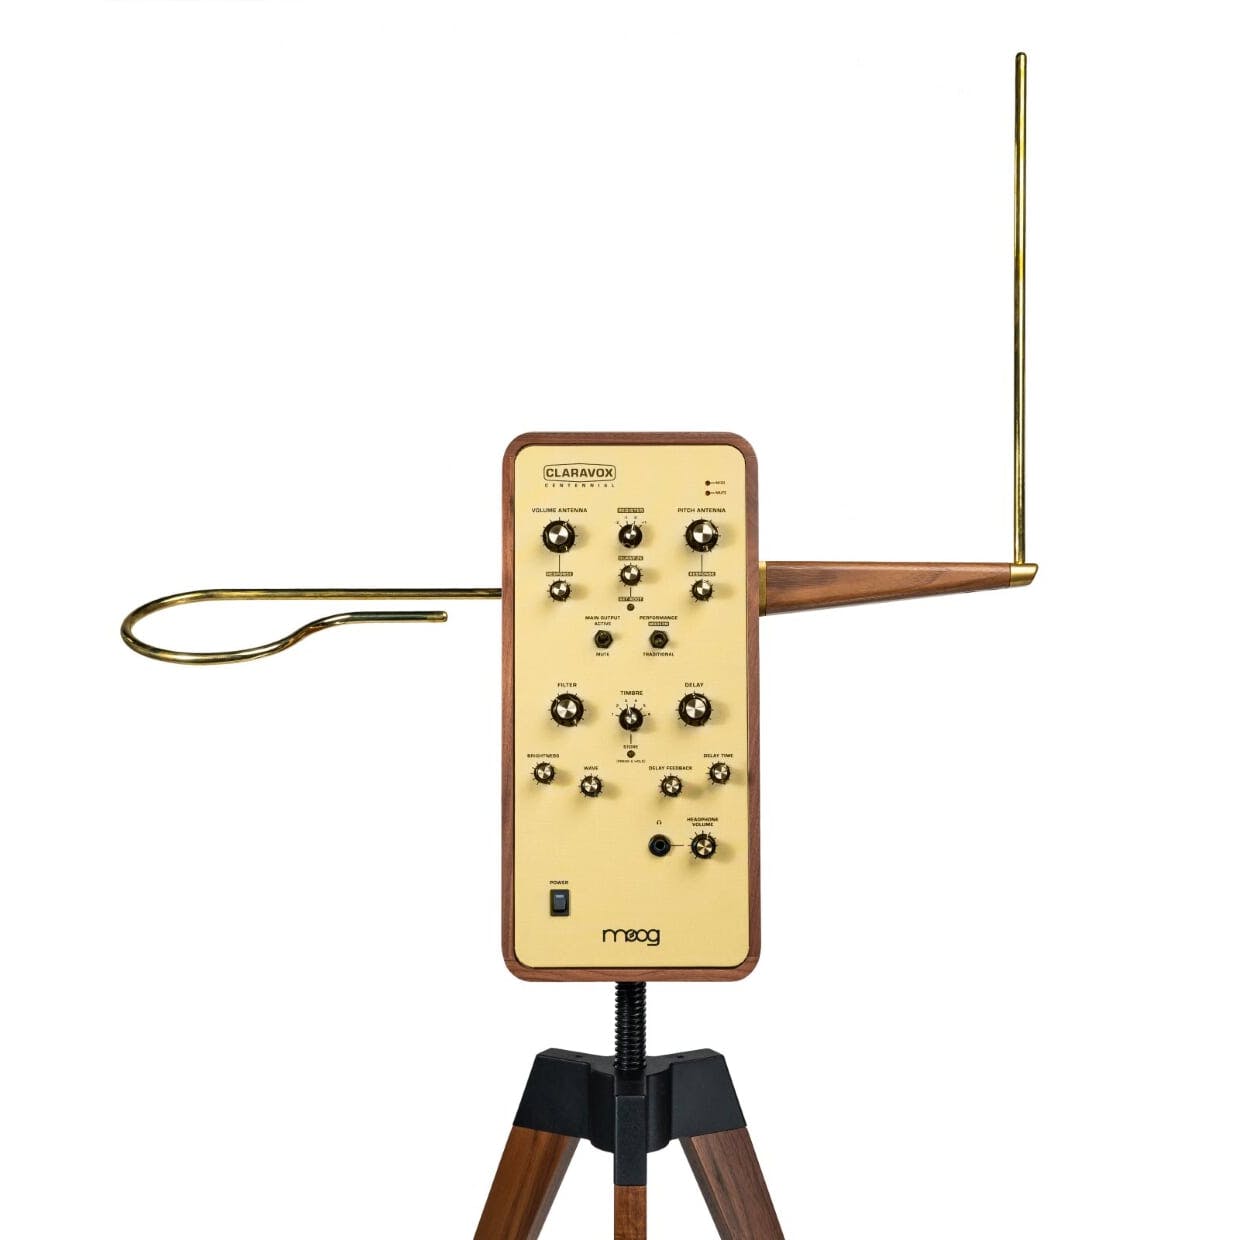 Moog unveils new theremin, the Claravox Centennial